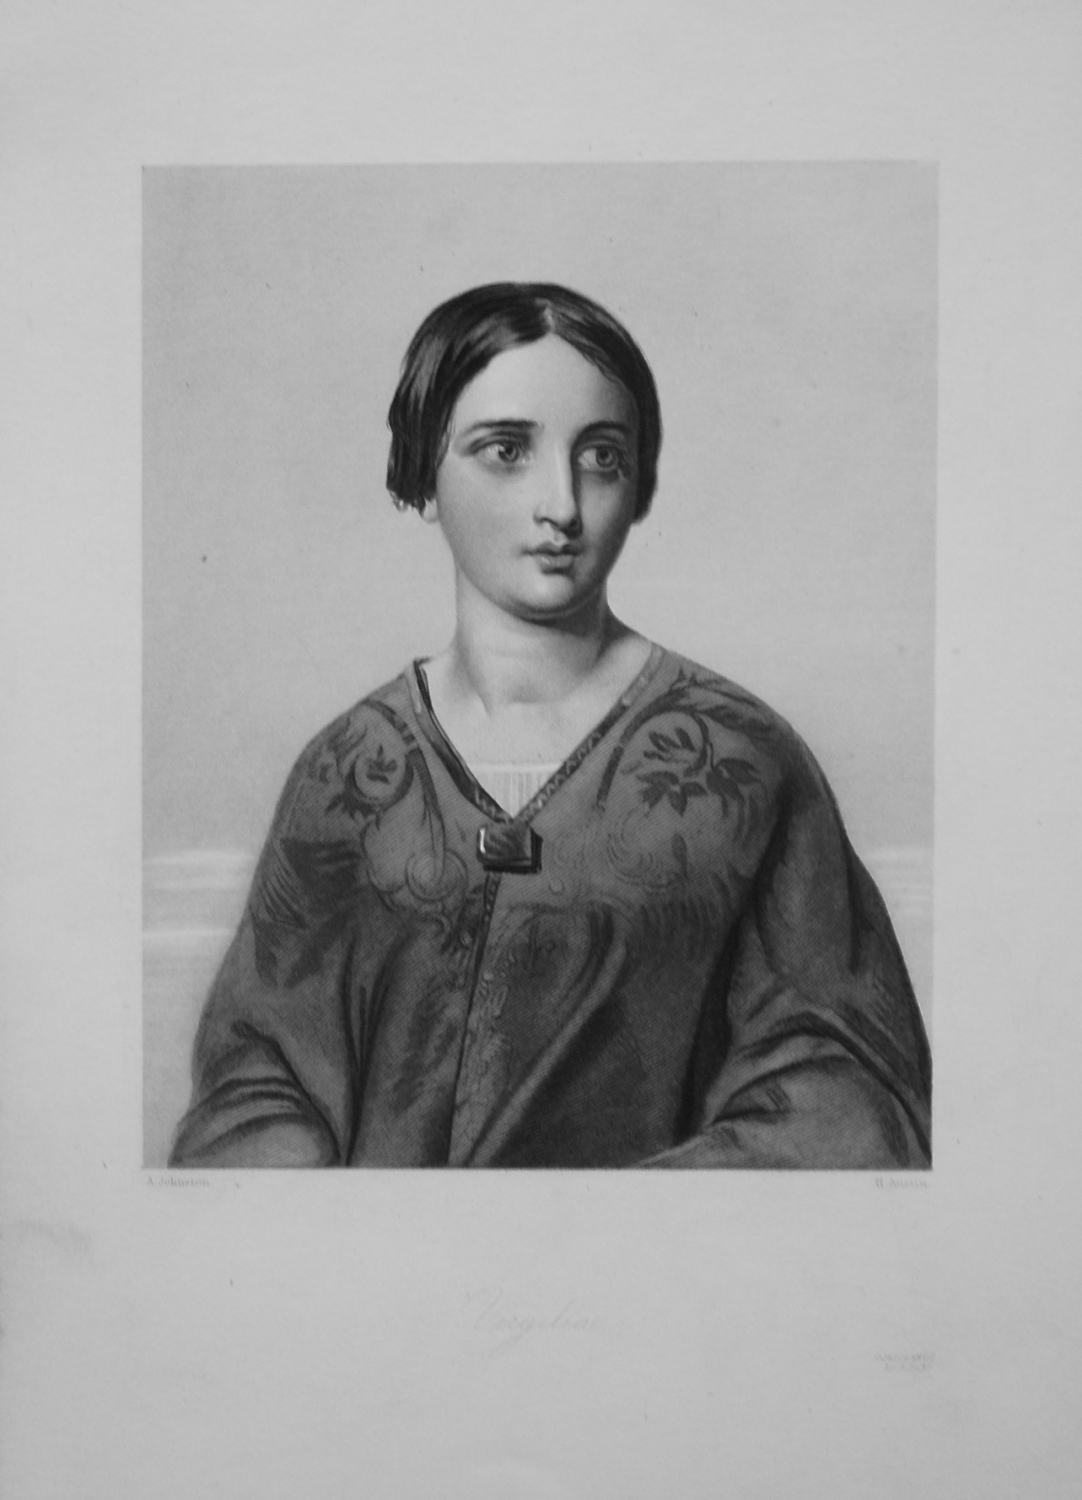 Virgilia. 1860.